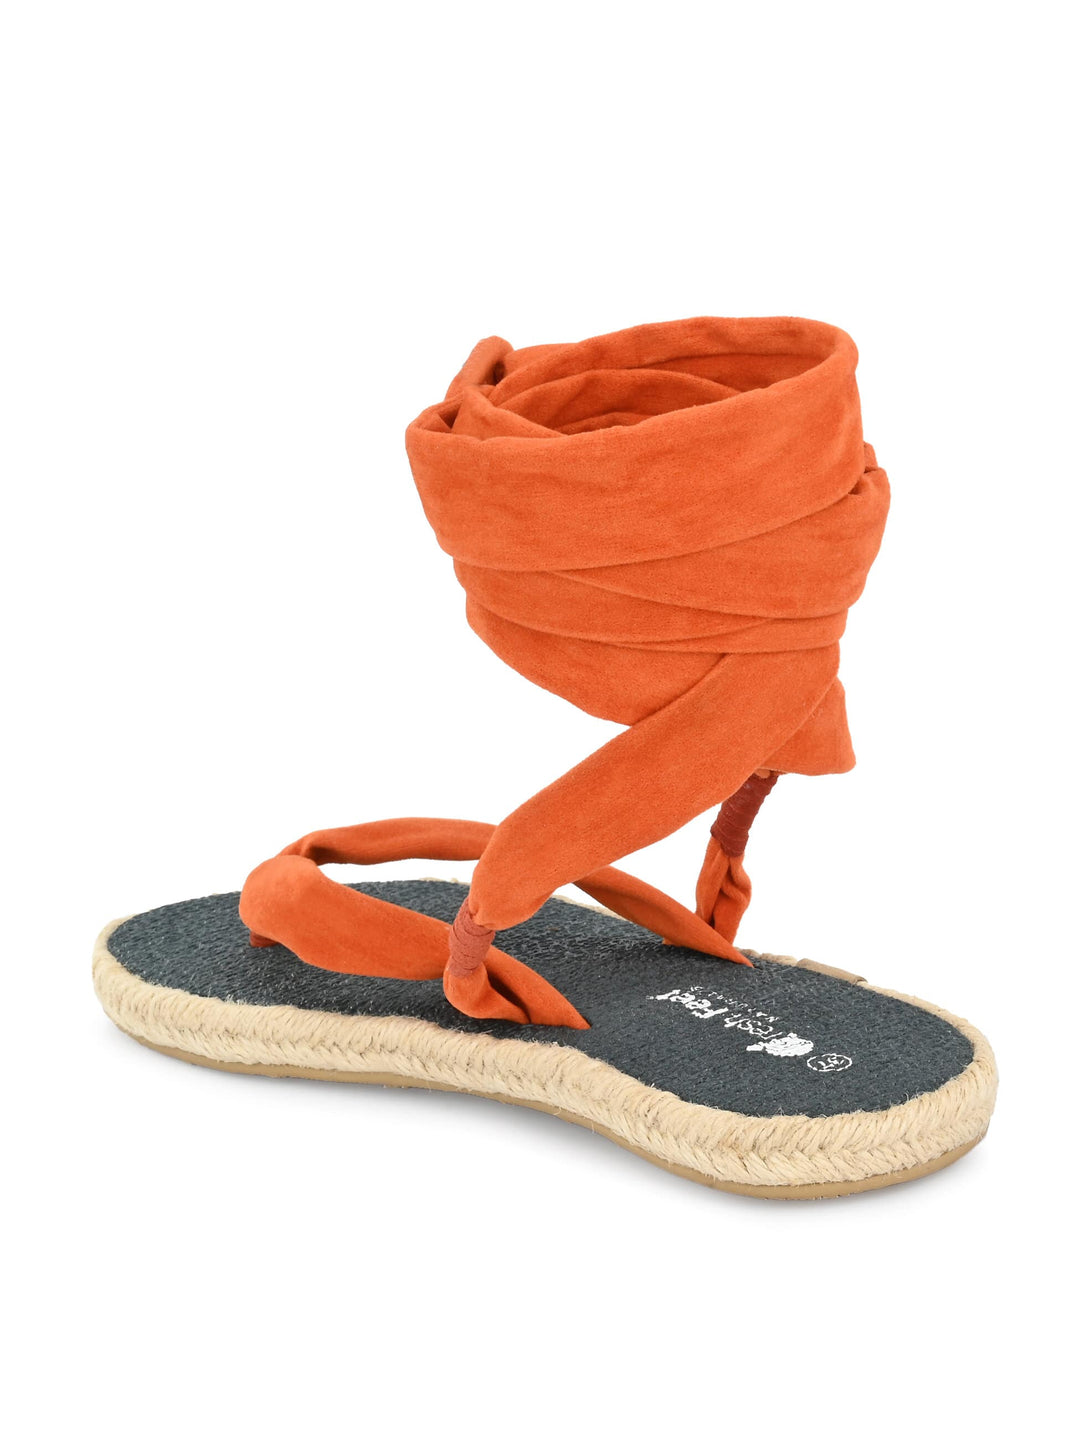 Saina Brick Red Yoga Mat Sandals for Women